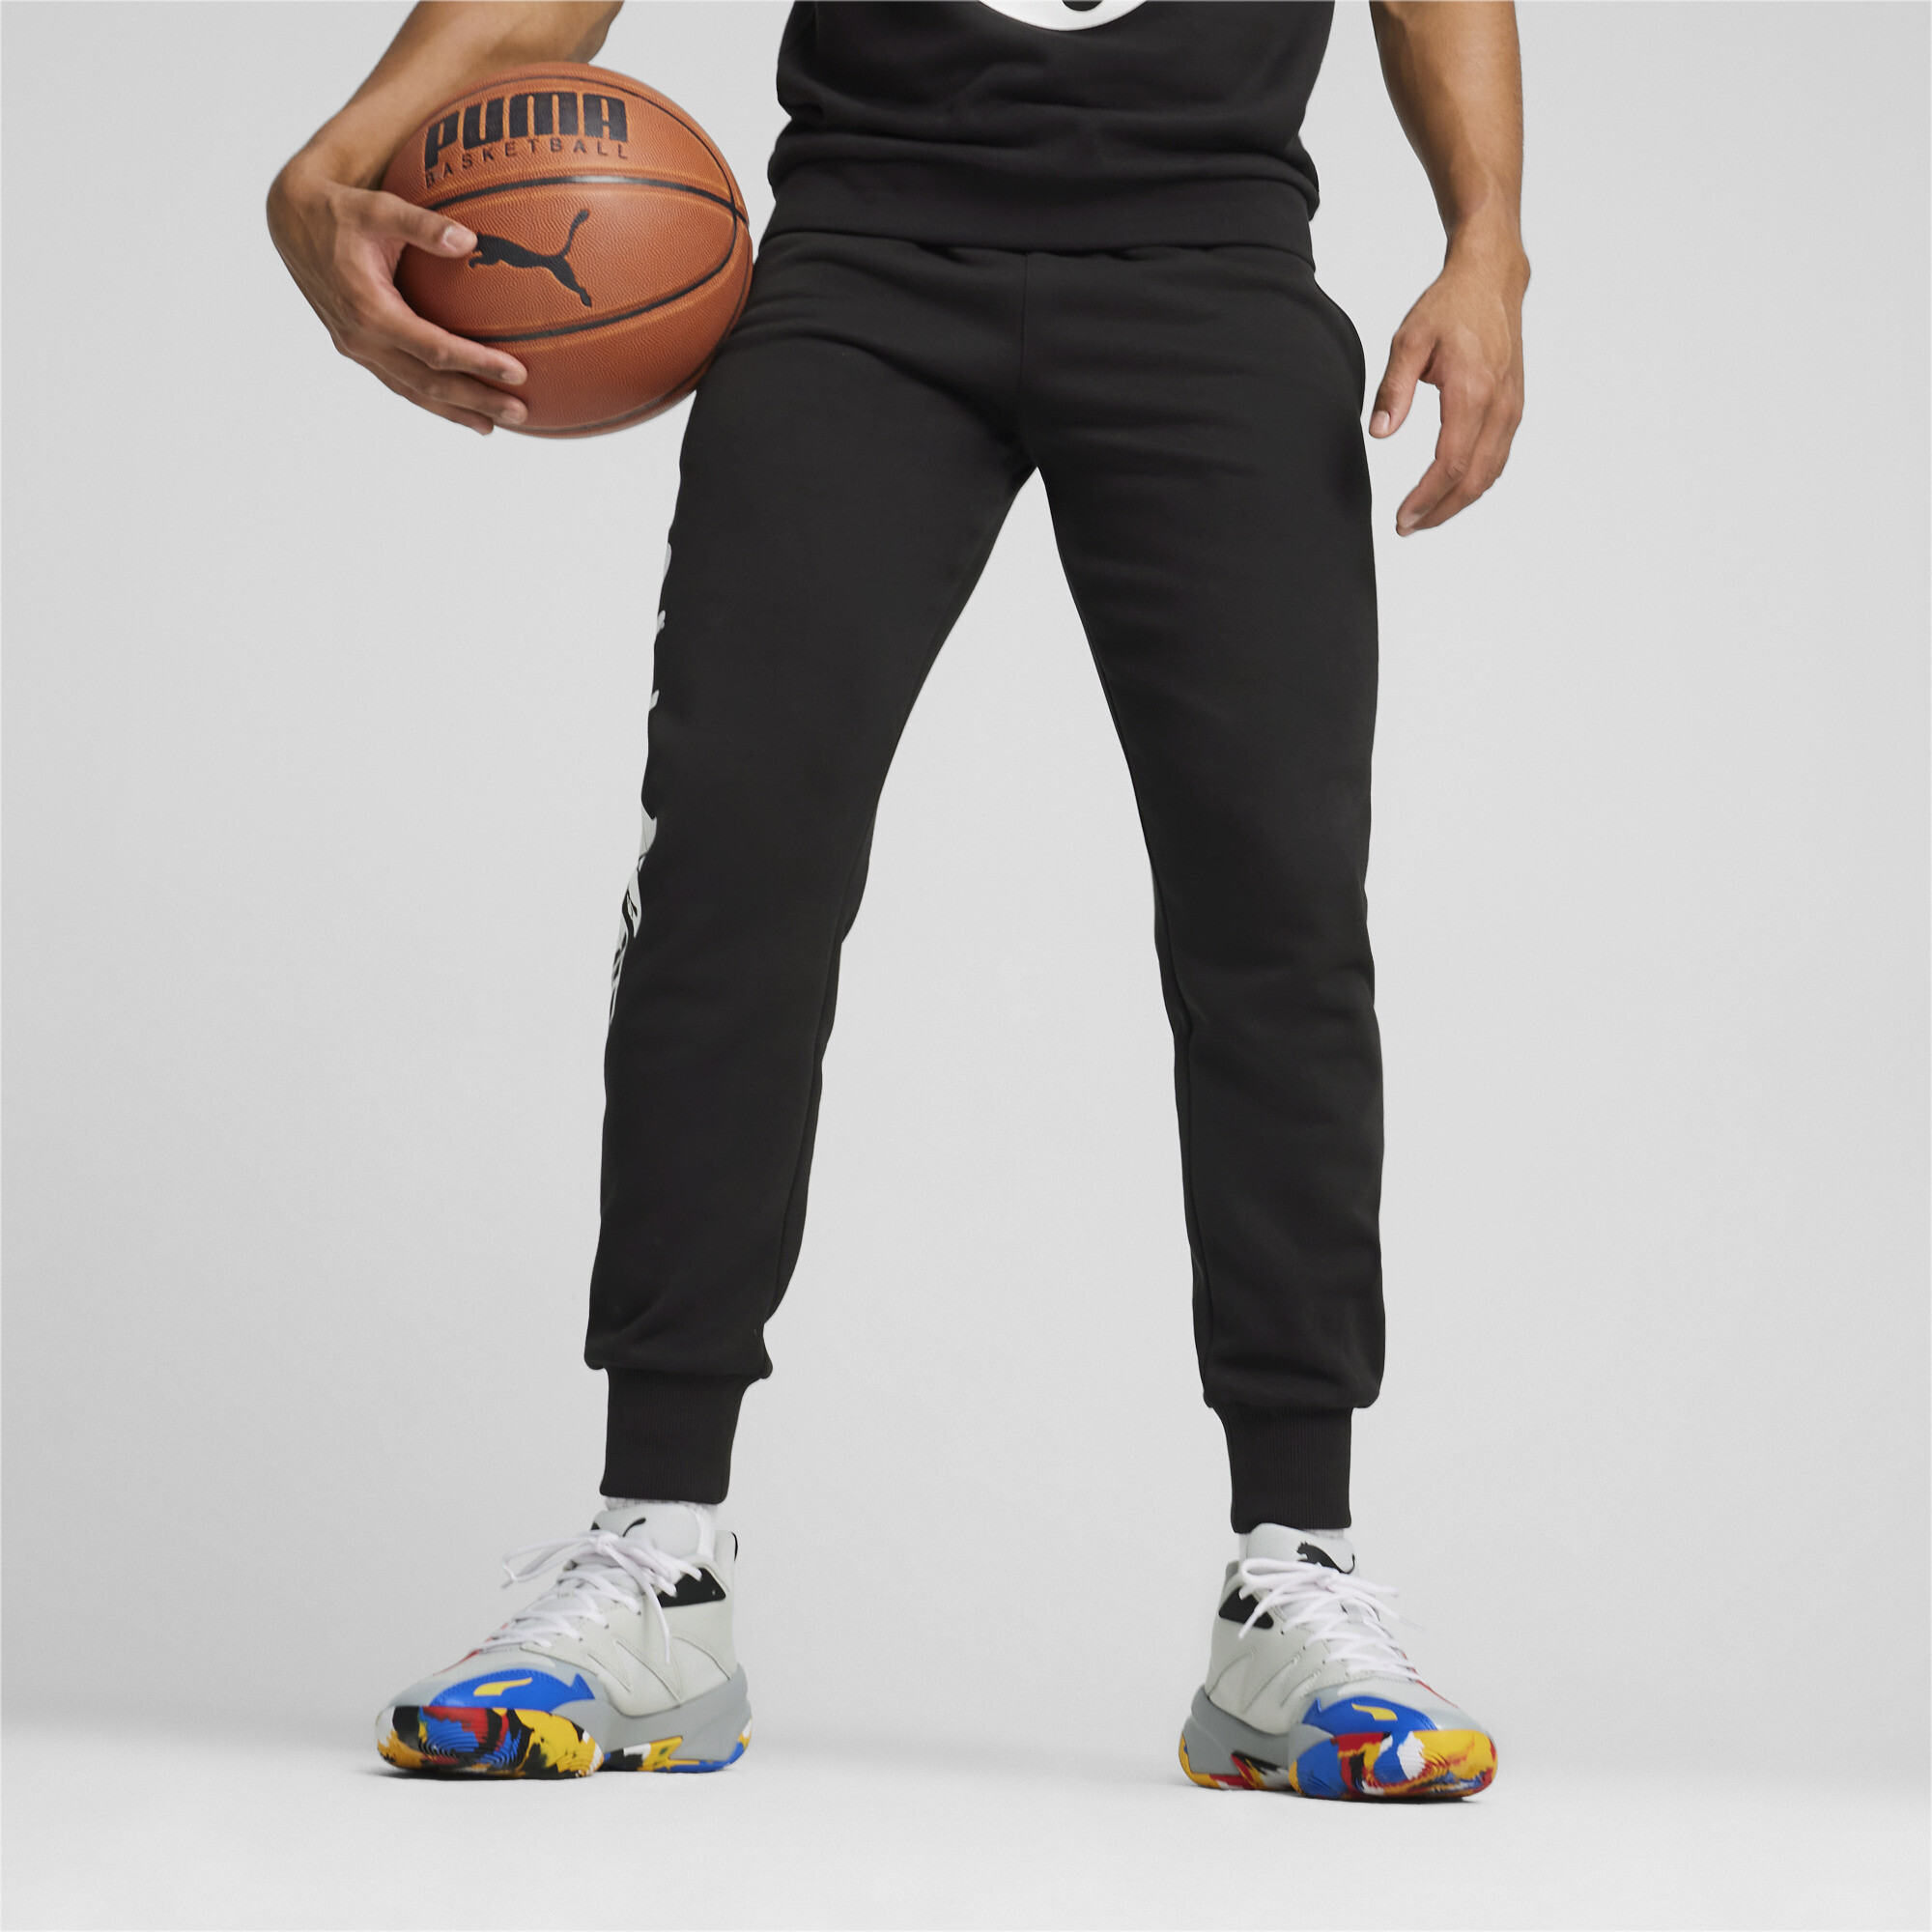 Men's Puma Posterize 2.0 Basketball Track Pants, Black, Size S, Sport